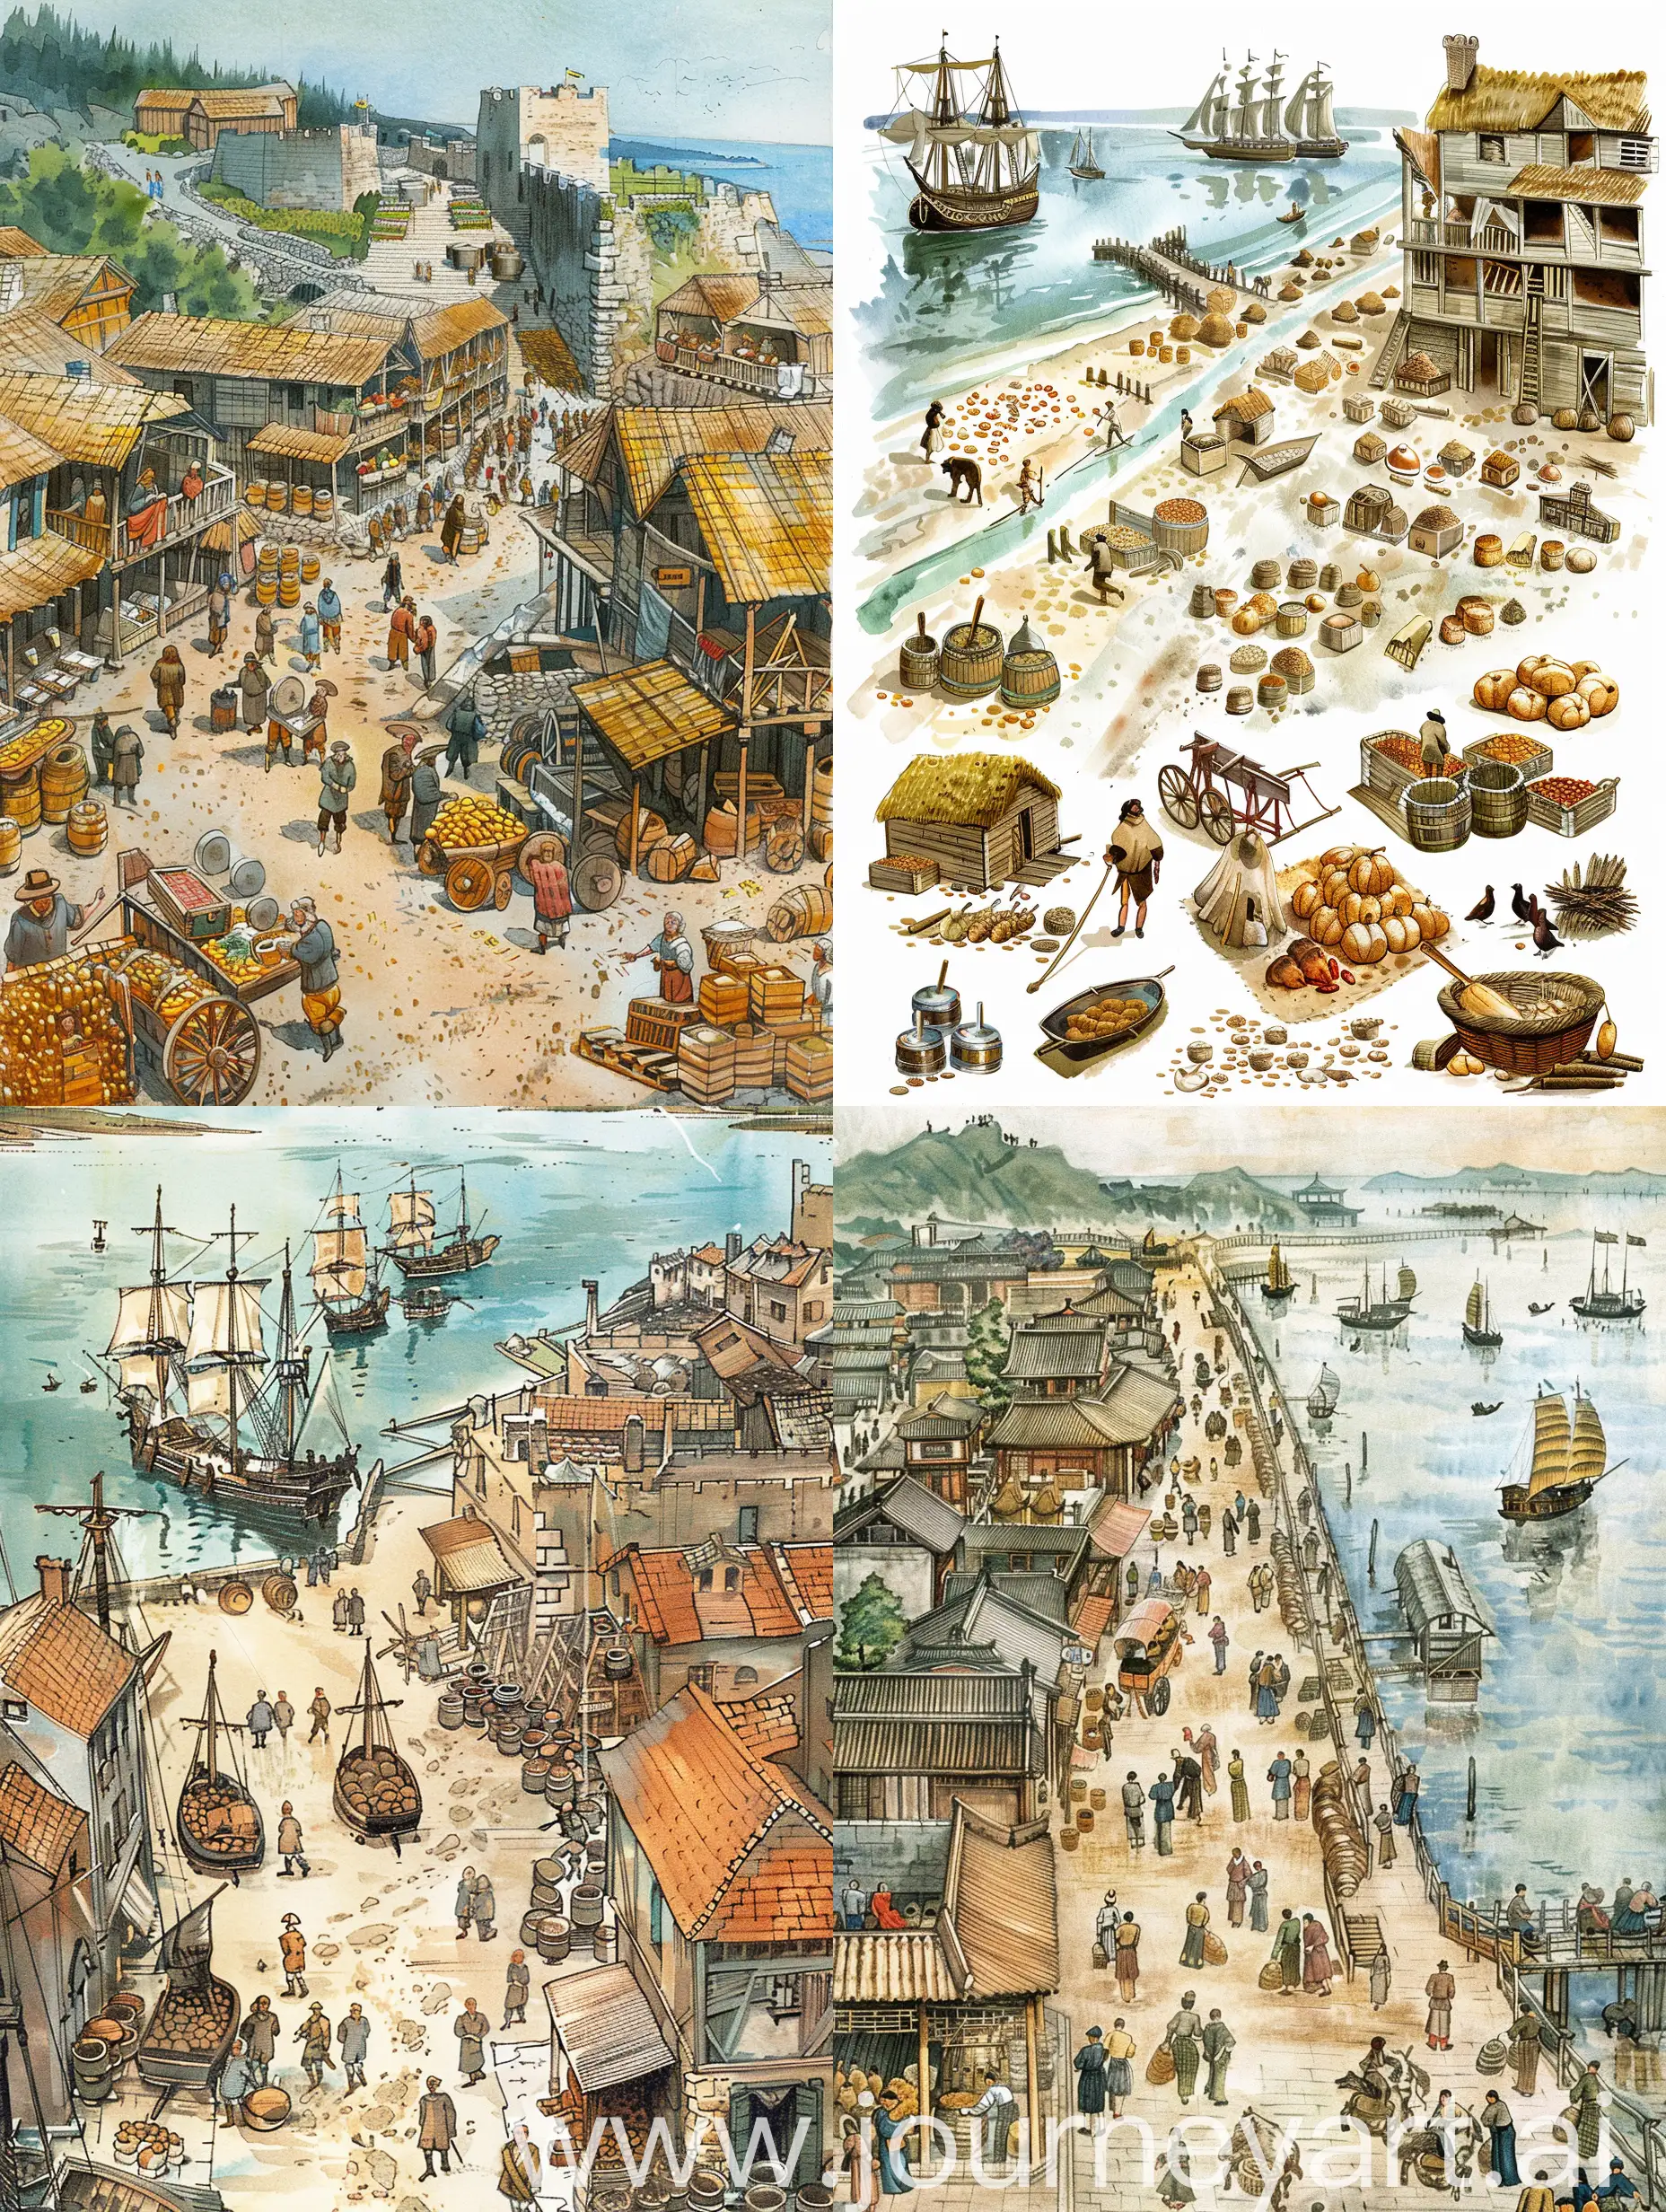 Evolution-of-Trade-Through-Centuries-A-Visual-Journey